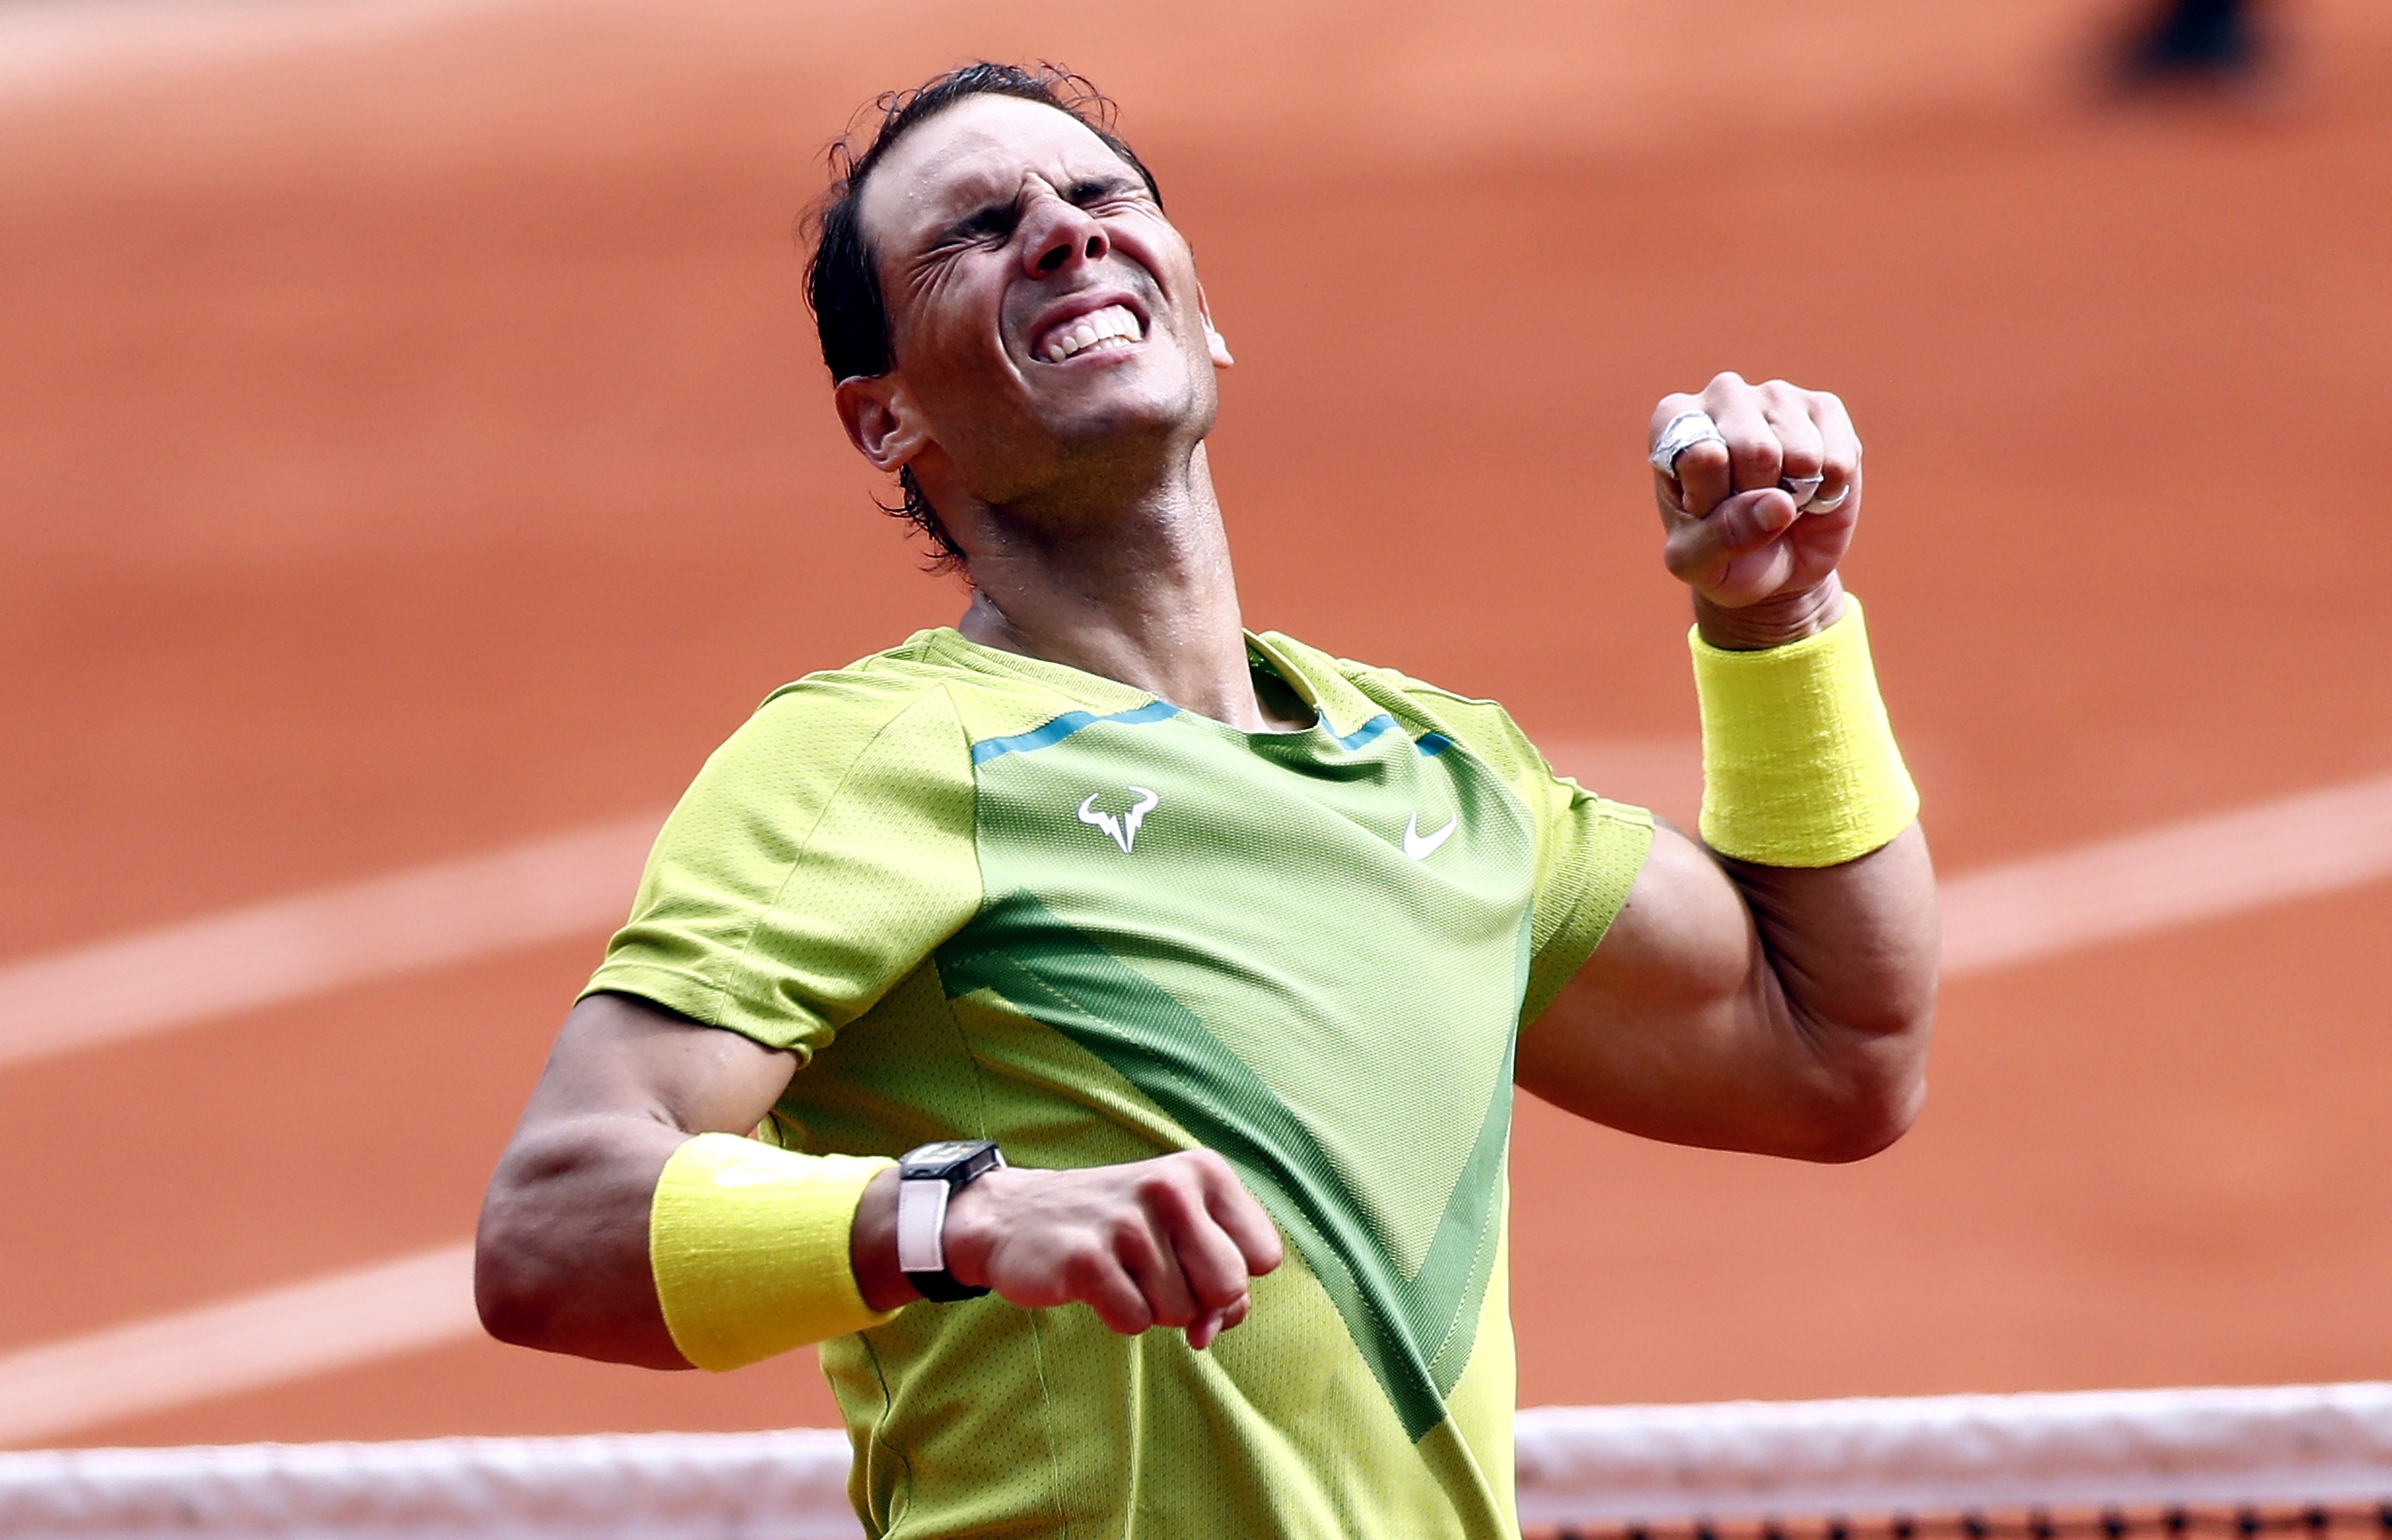 Nadal after his win at Roland Garros.